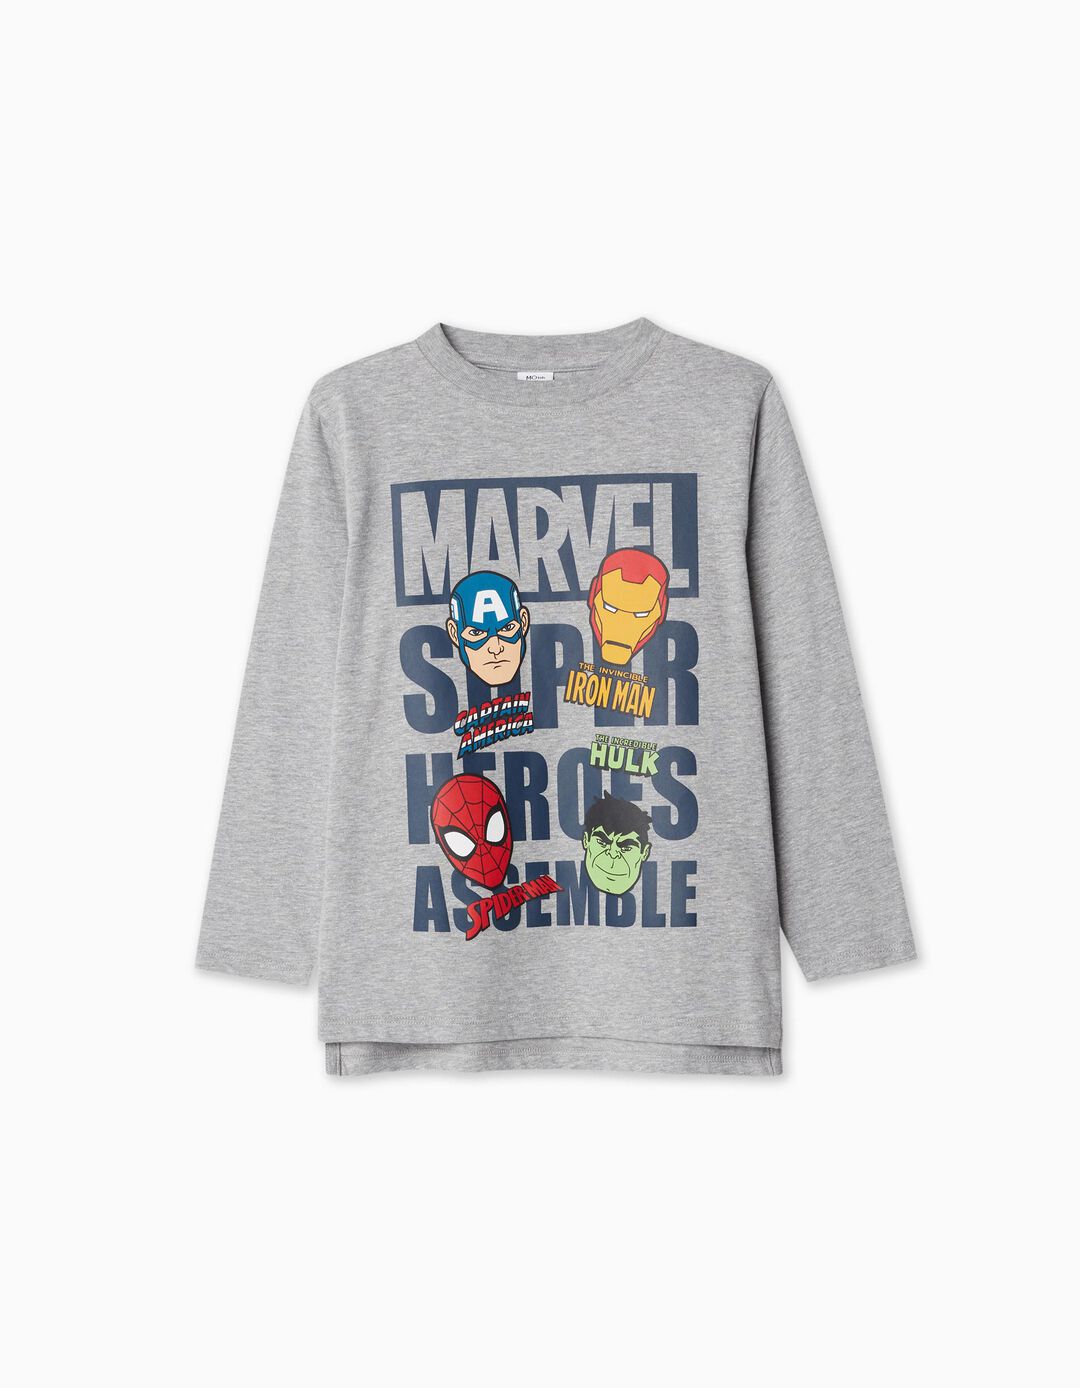 'Marvel' Long Sleeve T-shirt, Boy, Light Gray